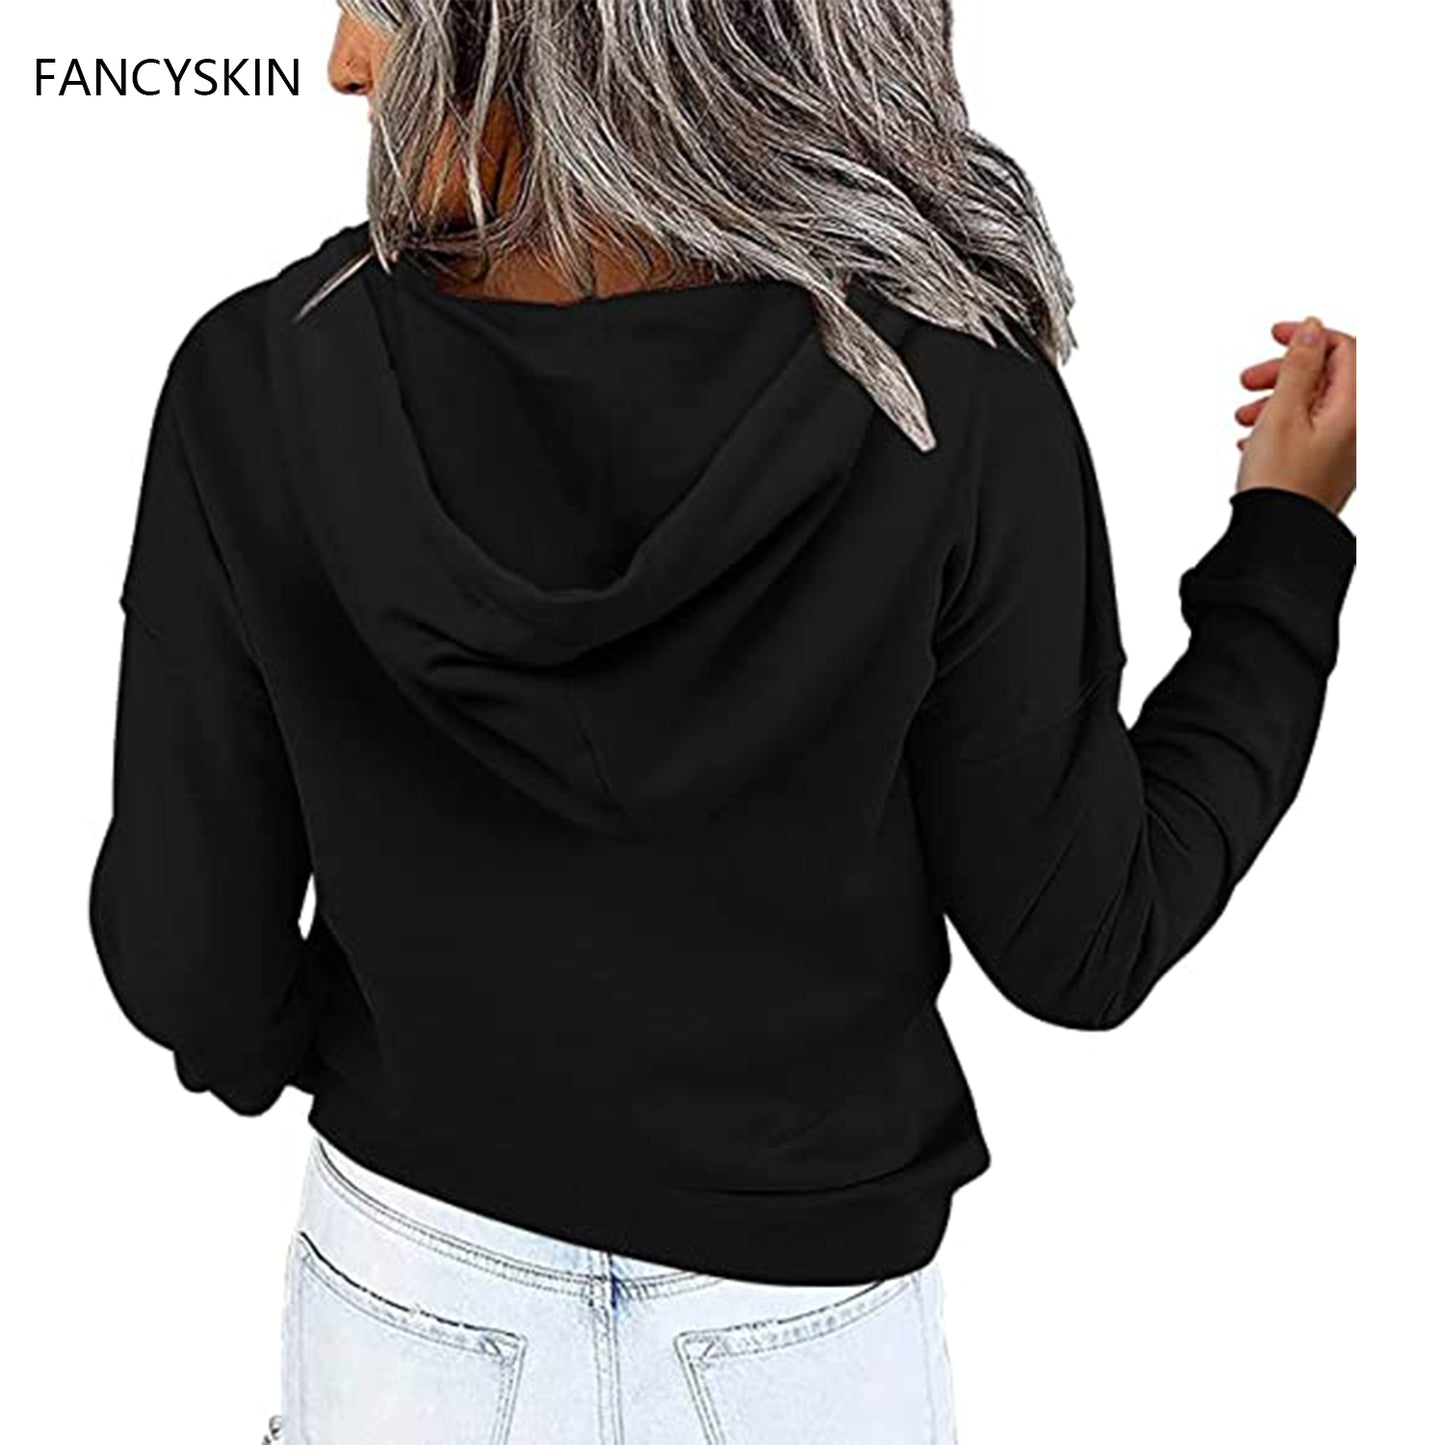 FANCYSKIN Women Hoodie Sweatshirts With Pockets